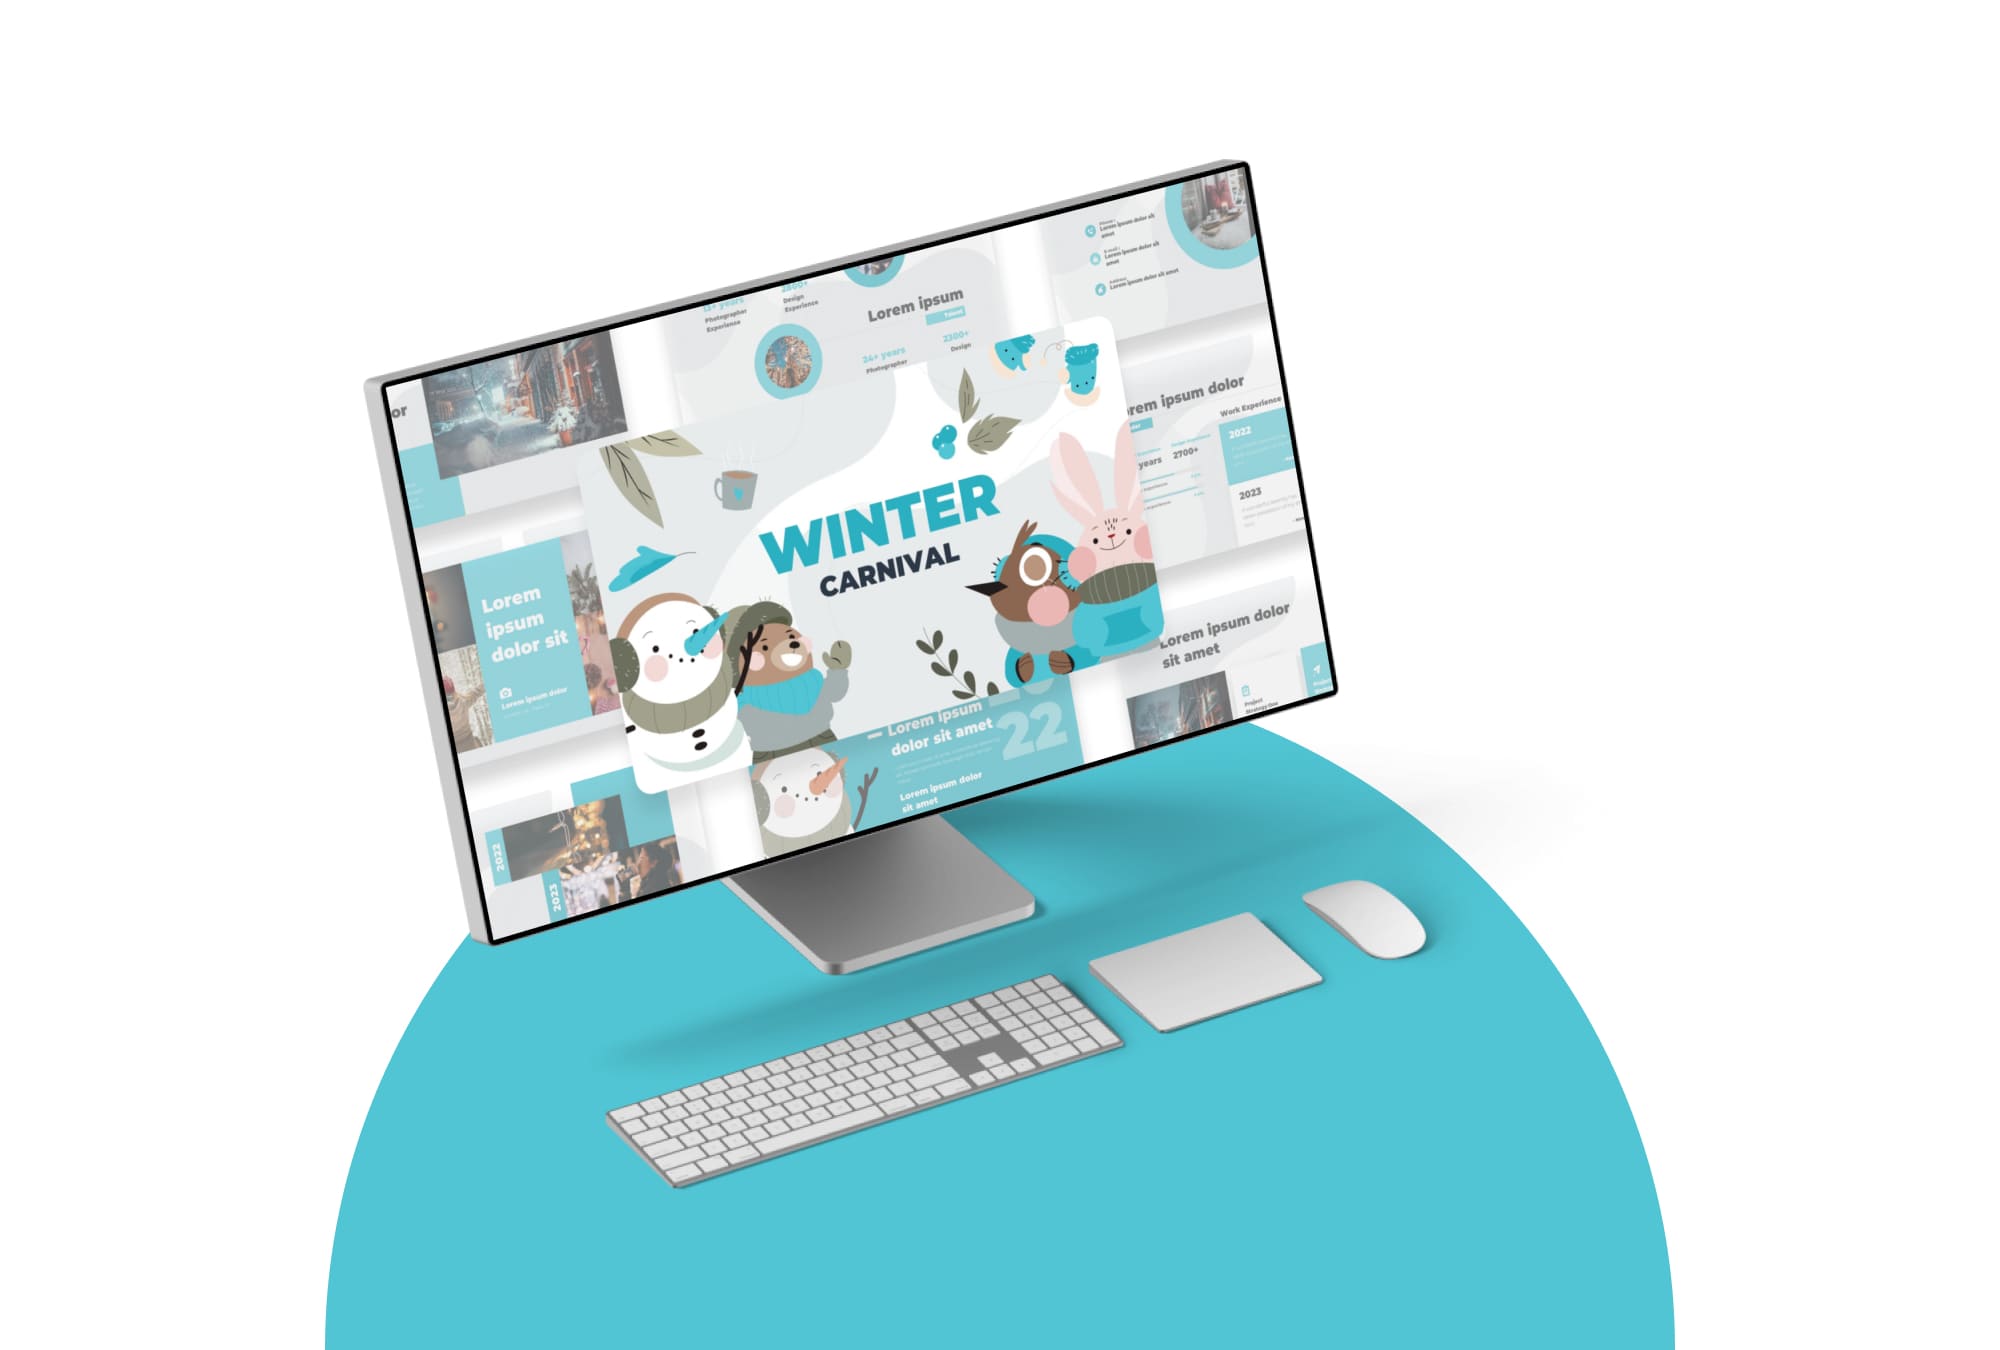 Winter carnival presentation template - desktop.